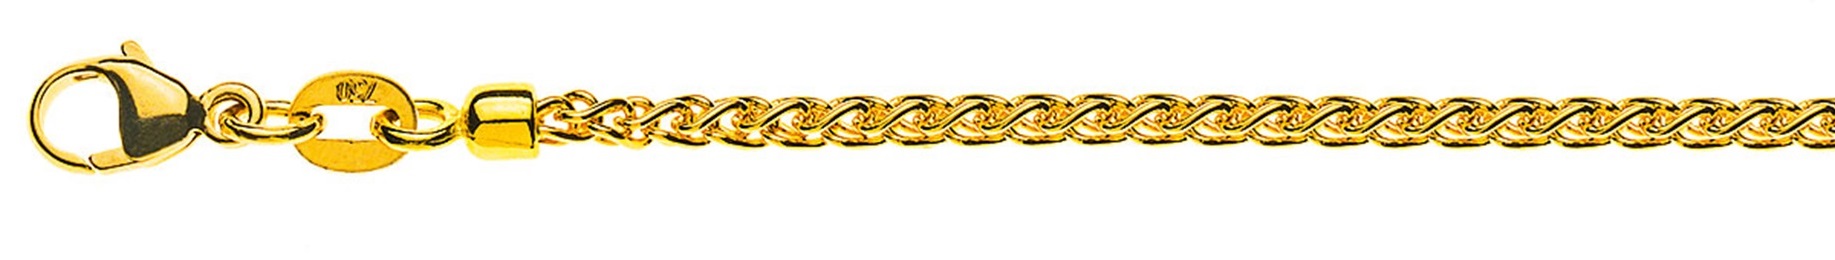 AURONOS Prestige Necklace yellow gold 18K cable chain 55cm 2.15mm